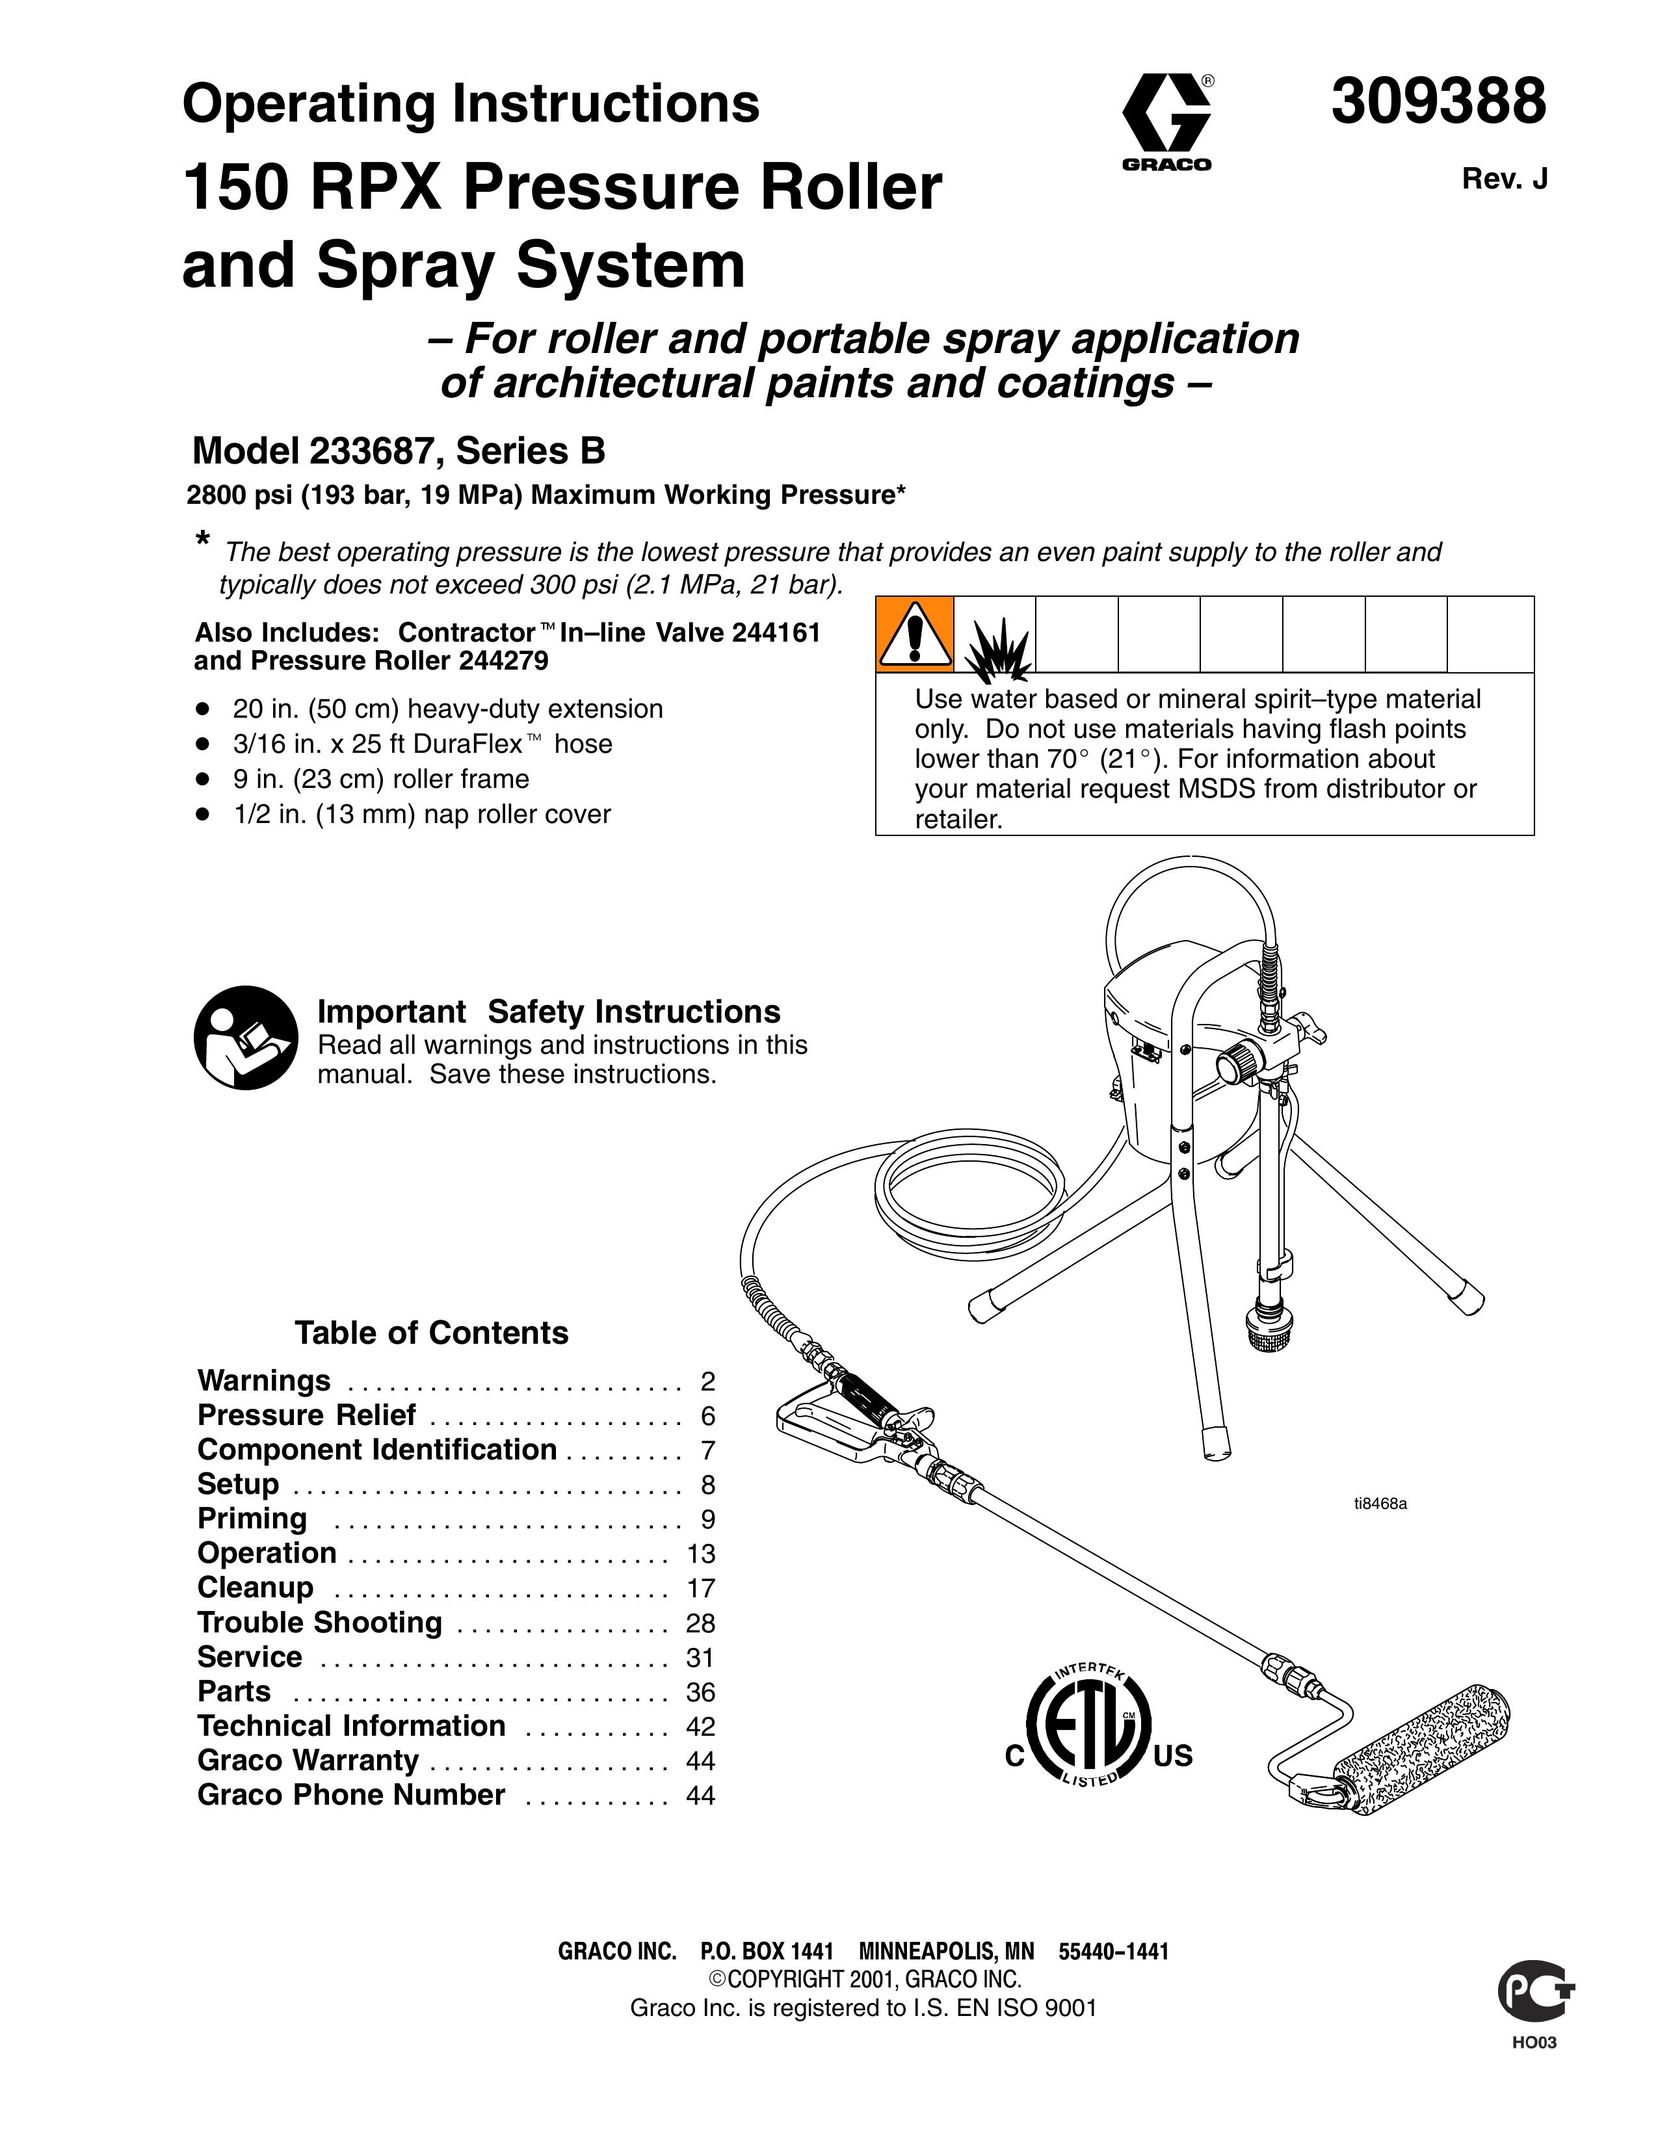 Graco Inc. 150 RPX Power Roller User Manual